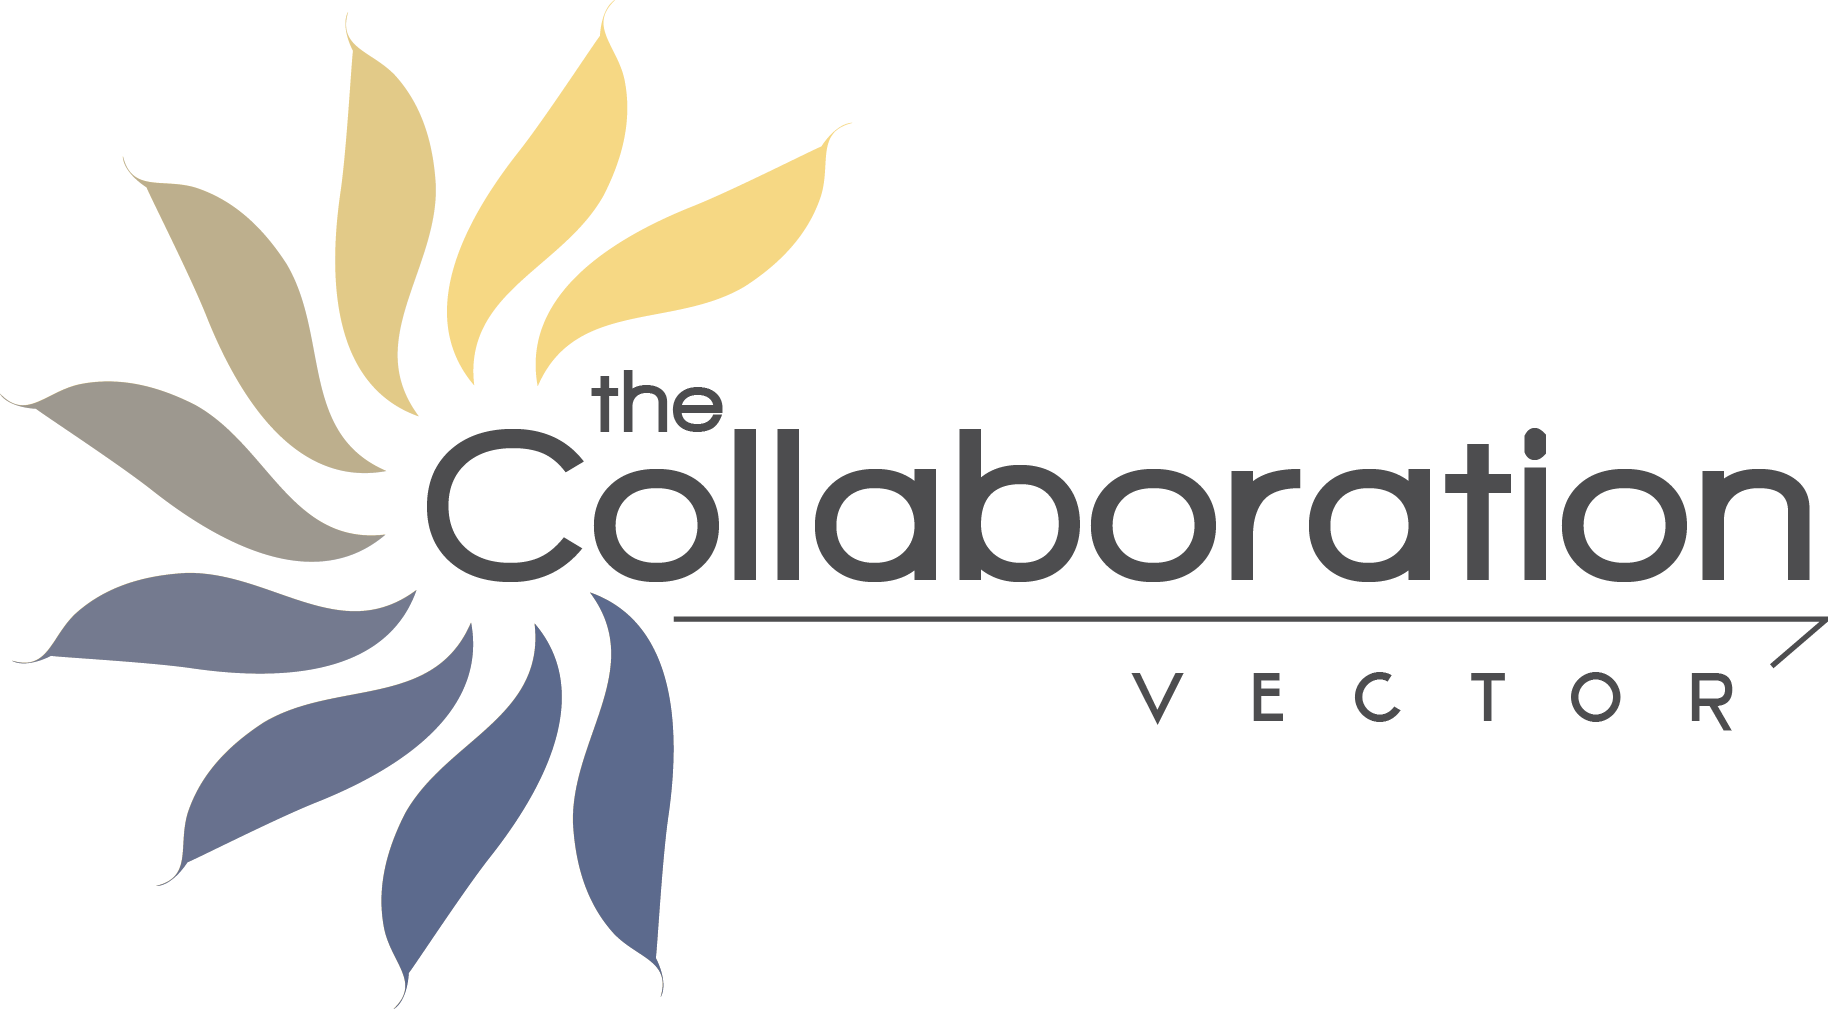 The Collaboration Vector Inc. logo